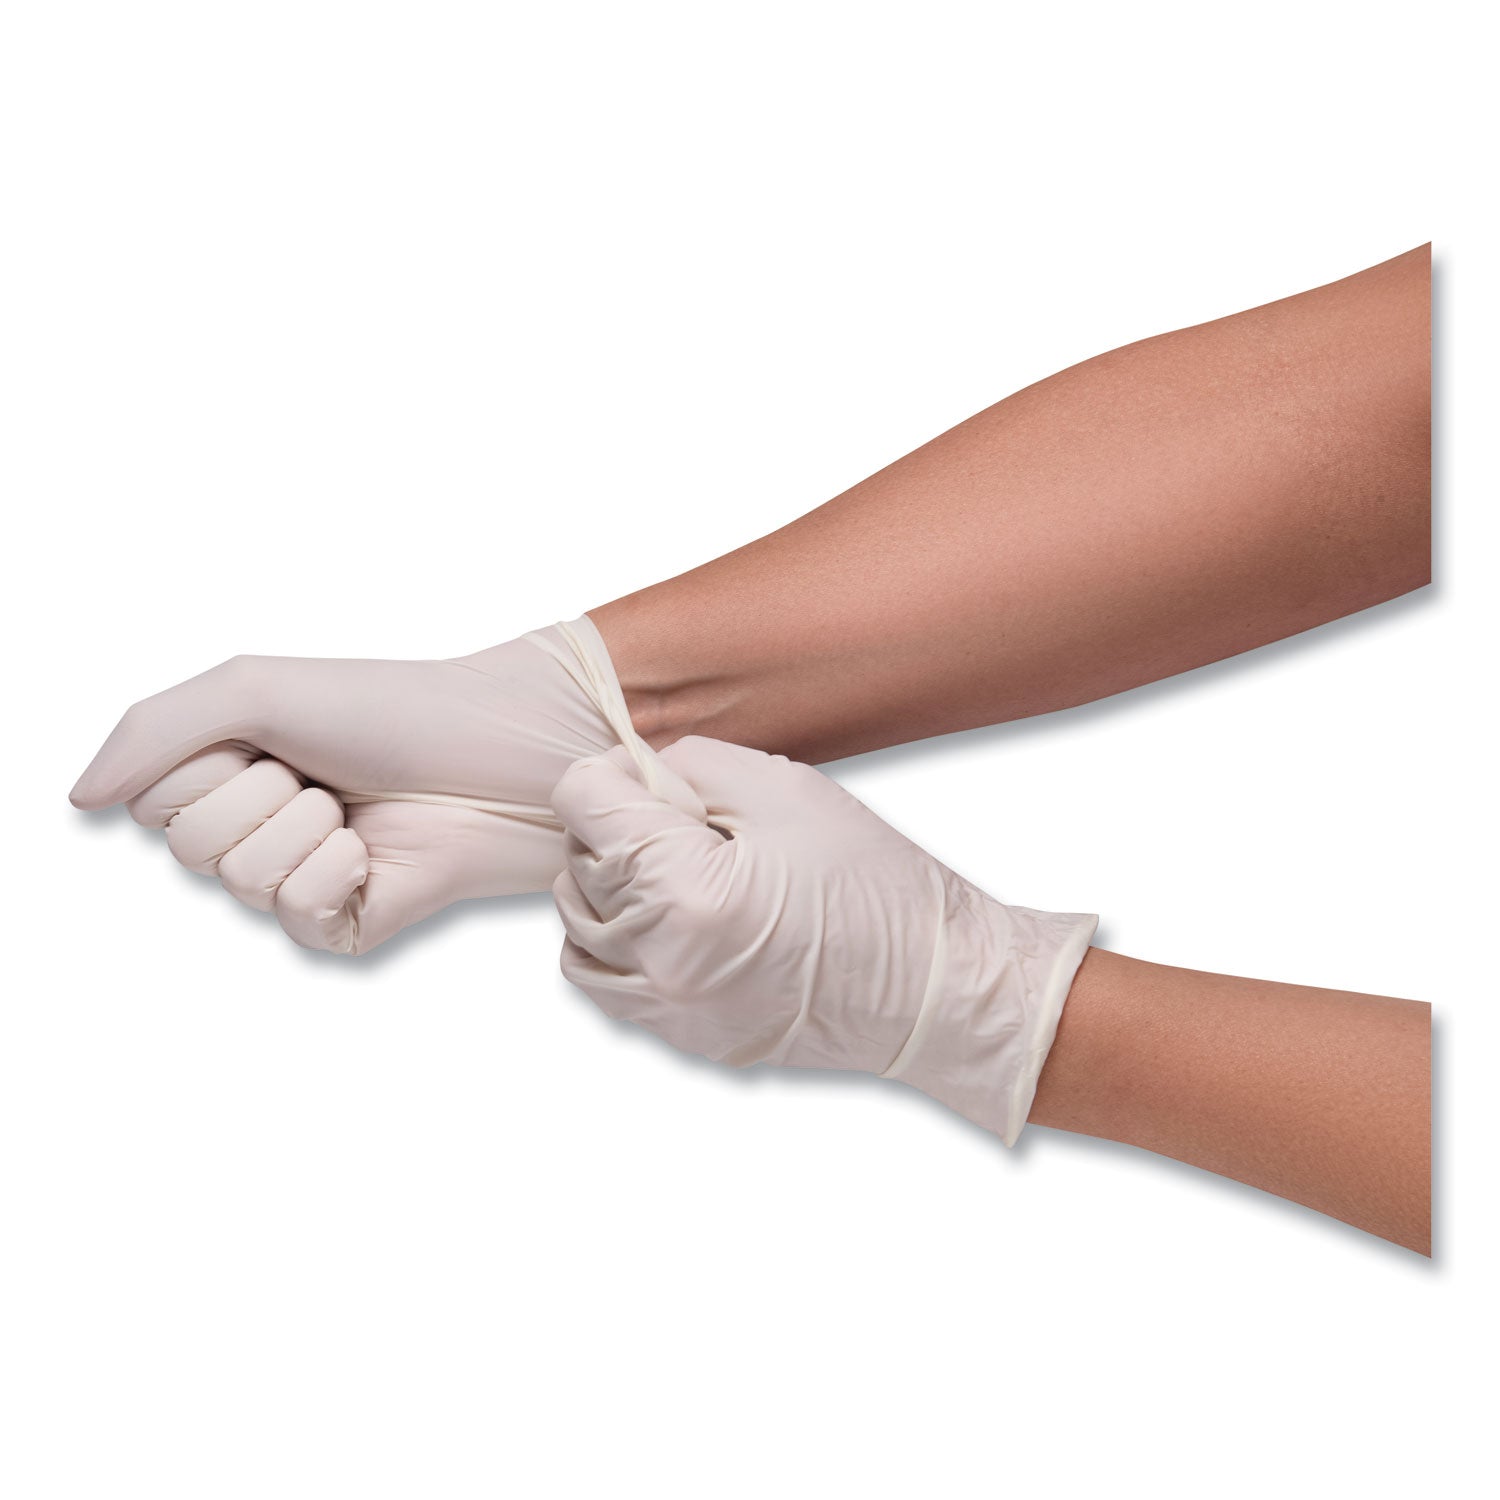 stretch-vinyl-examination-gloves-cream-small-100-box_sezscvnp102bx - 3